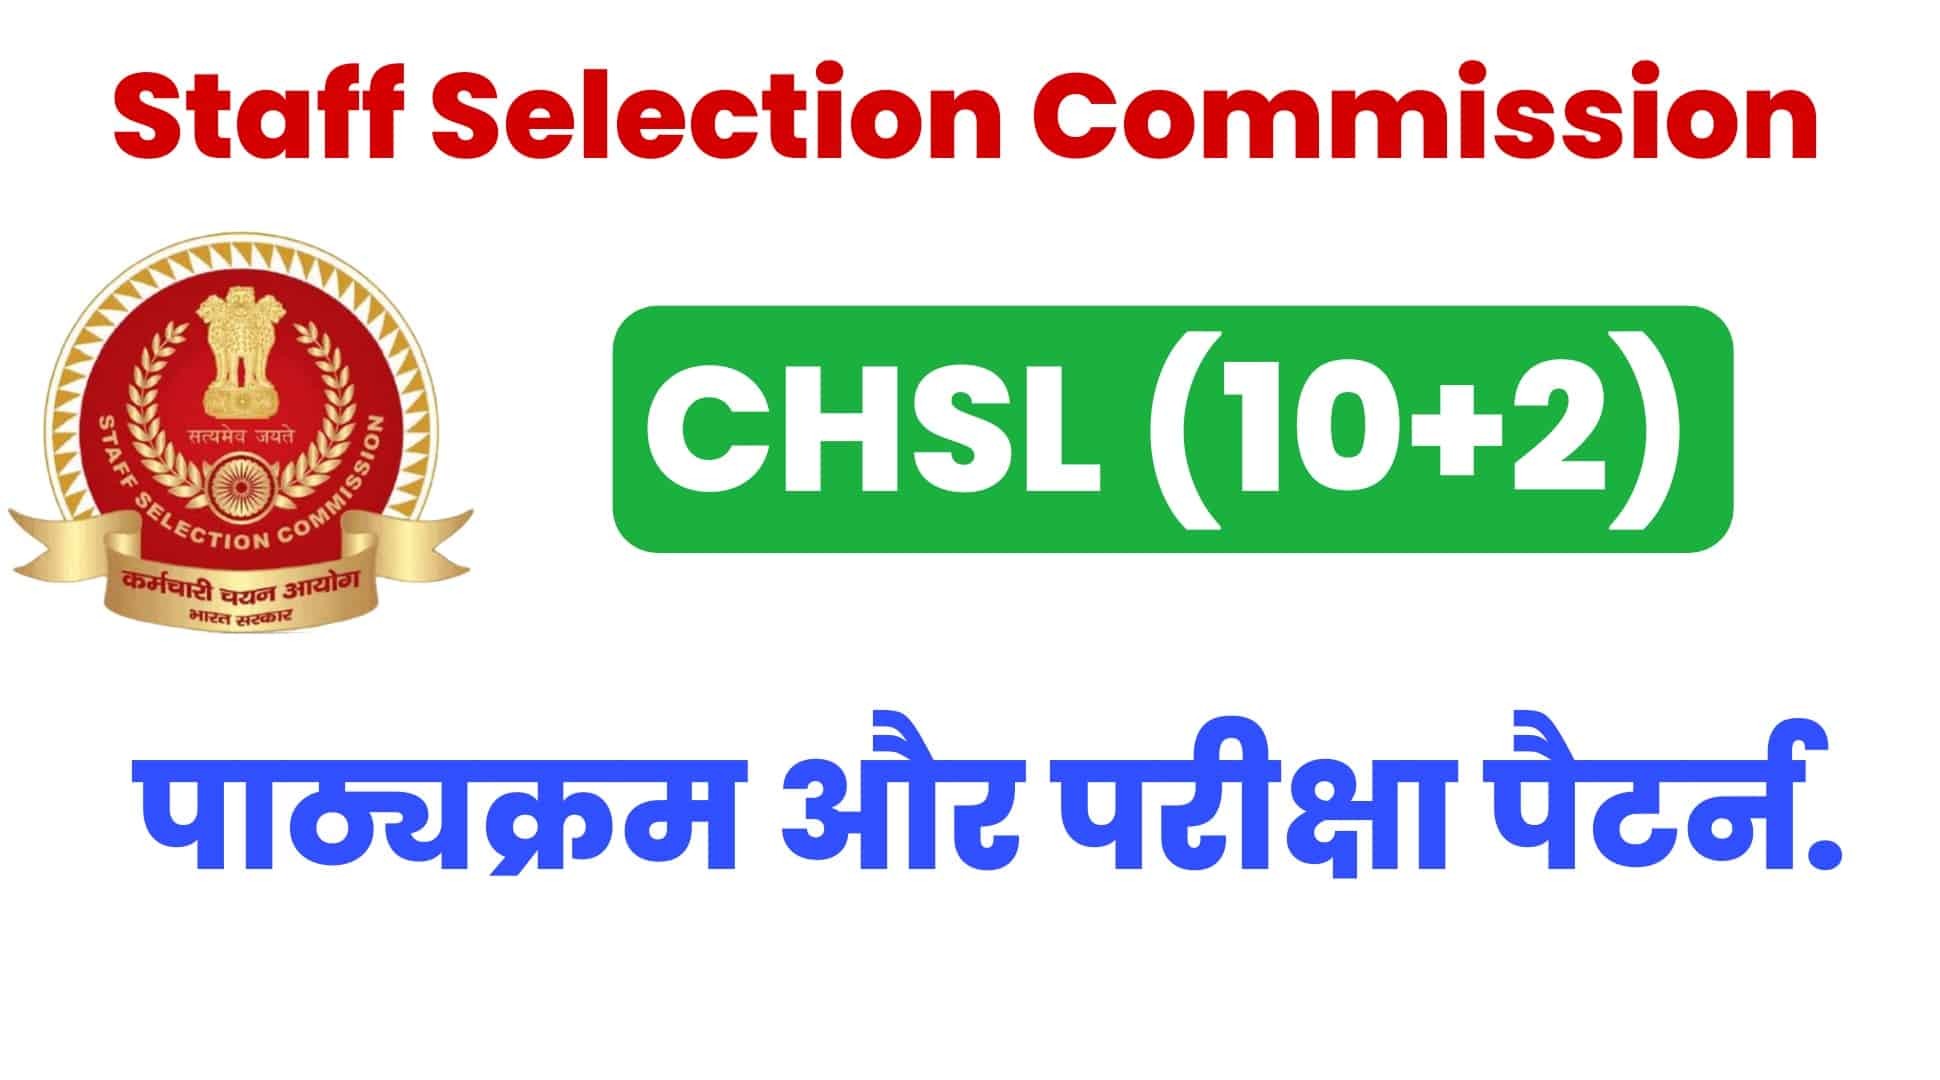 SSC CHSL Syllabus 2022 In Hindi | एसएससी CHSL सिलेबस हिंदी में